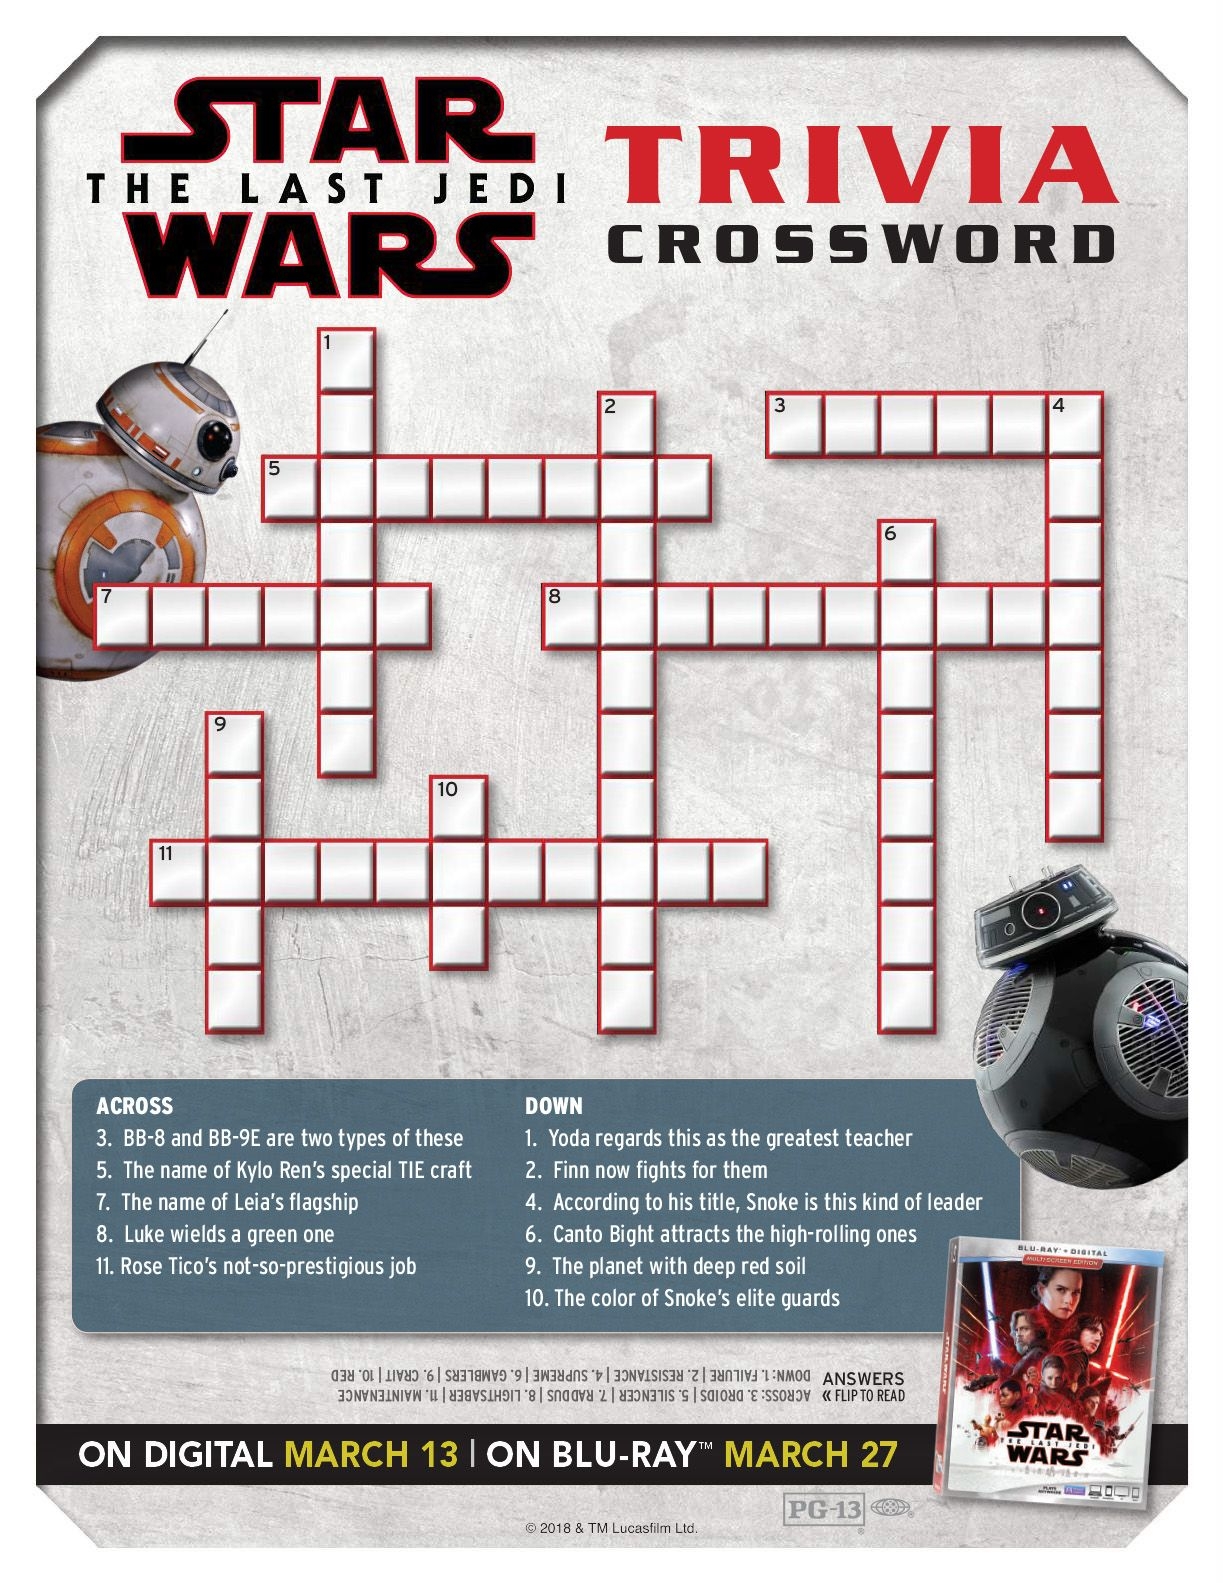 Star Wars The Last Jedi Trivia Crossword Star Wars Facts Printable Road Trip Games Star Wars Humor